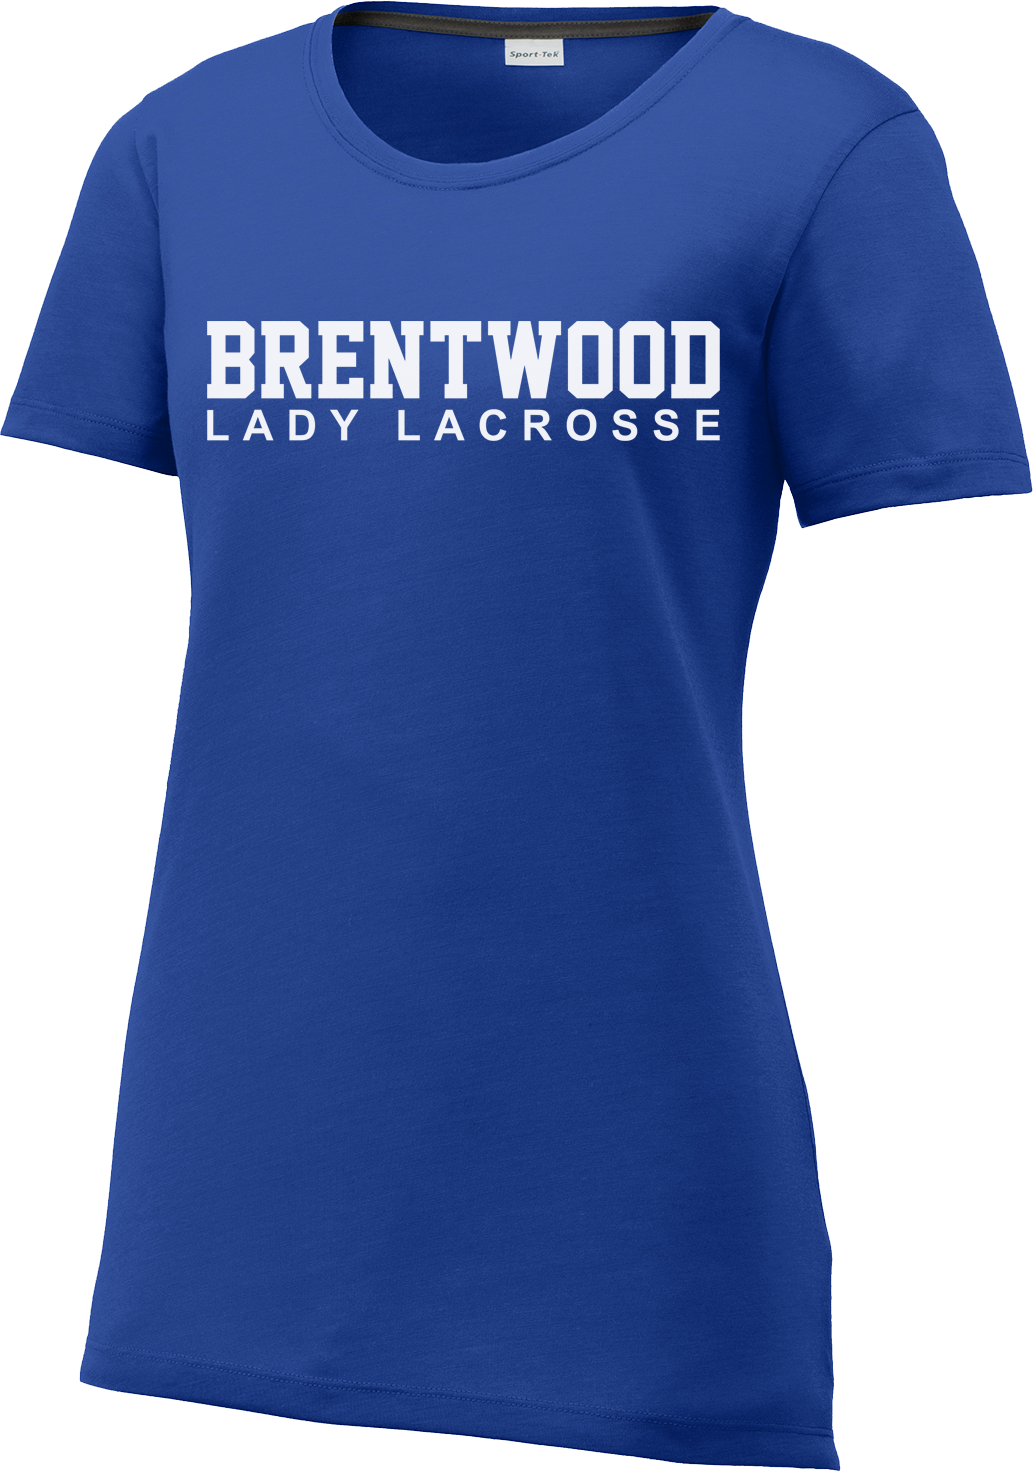 Brentwood Women's Royal Blue CottonTouch Performance T-Shirt